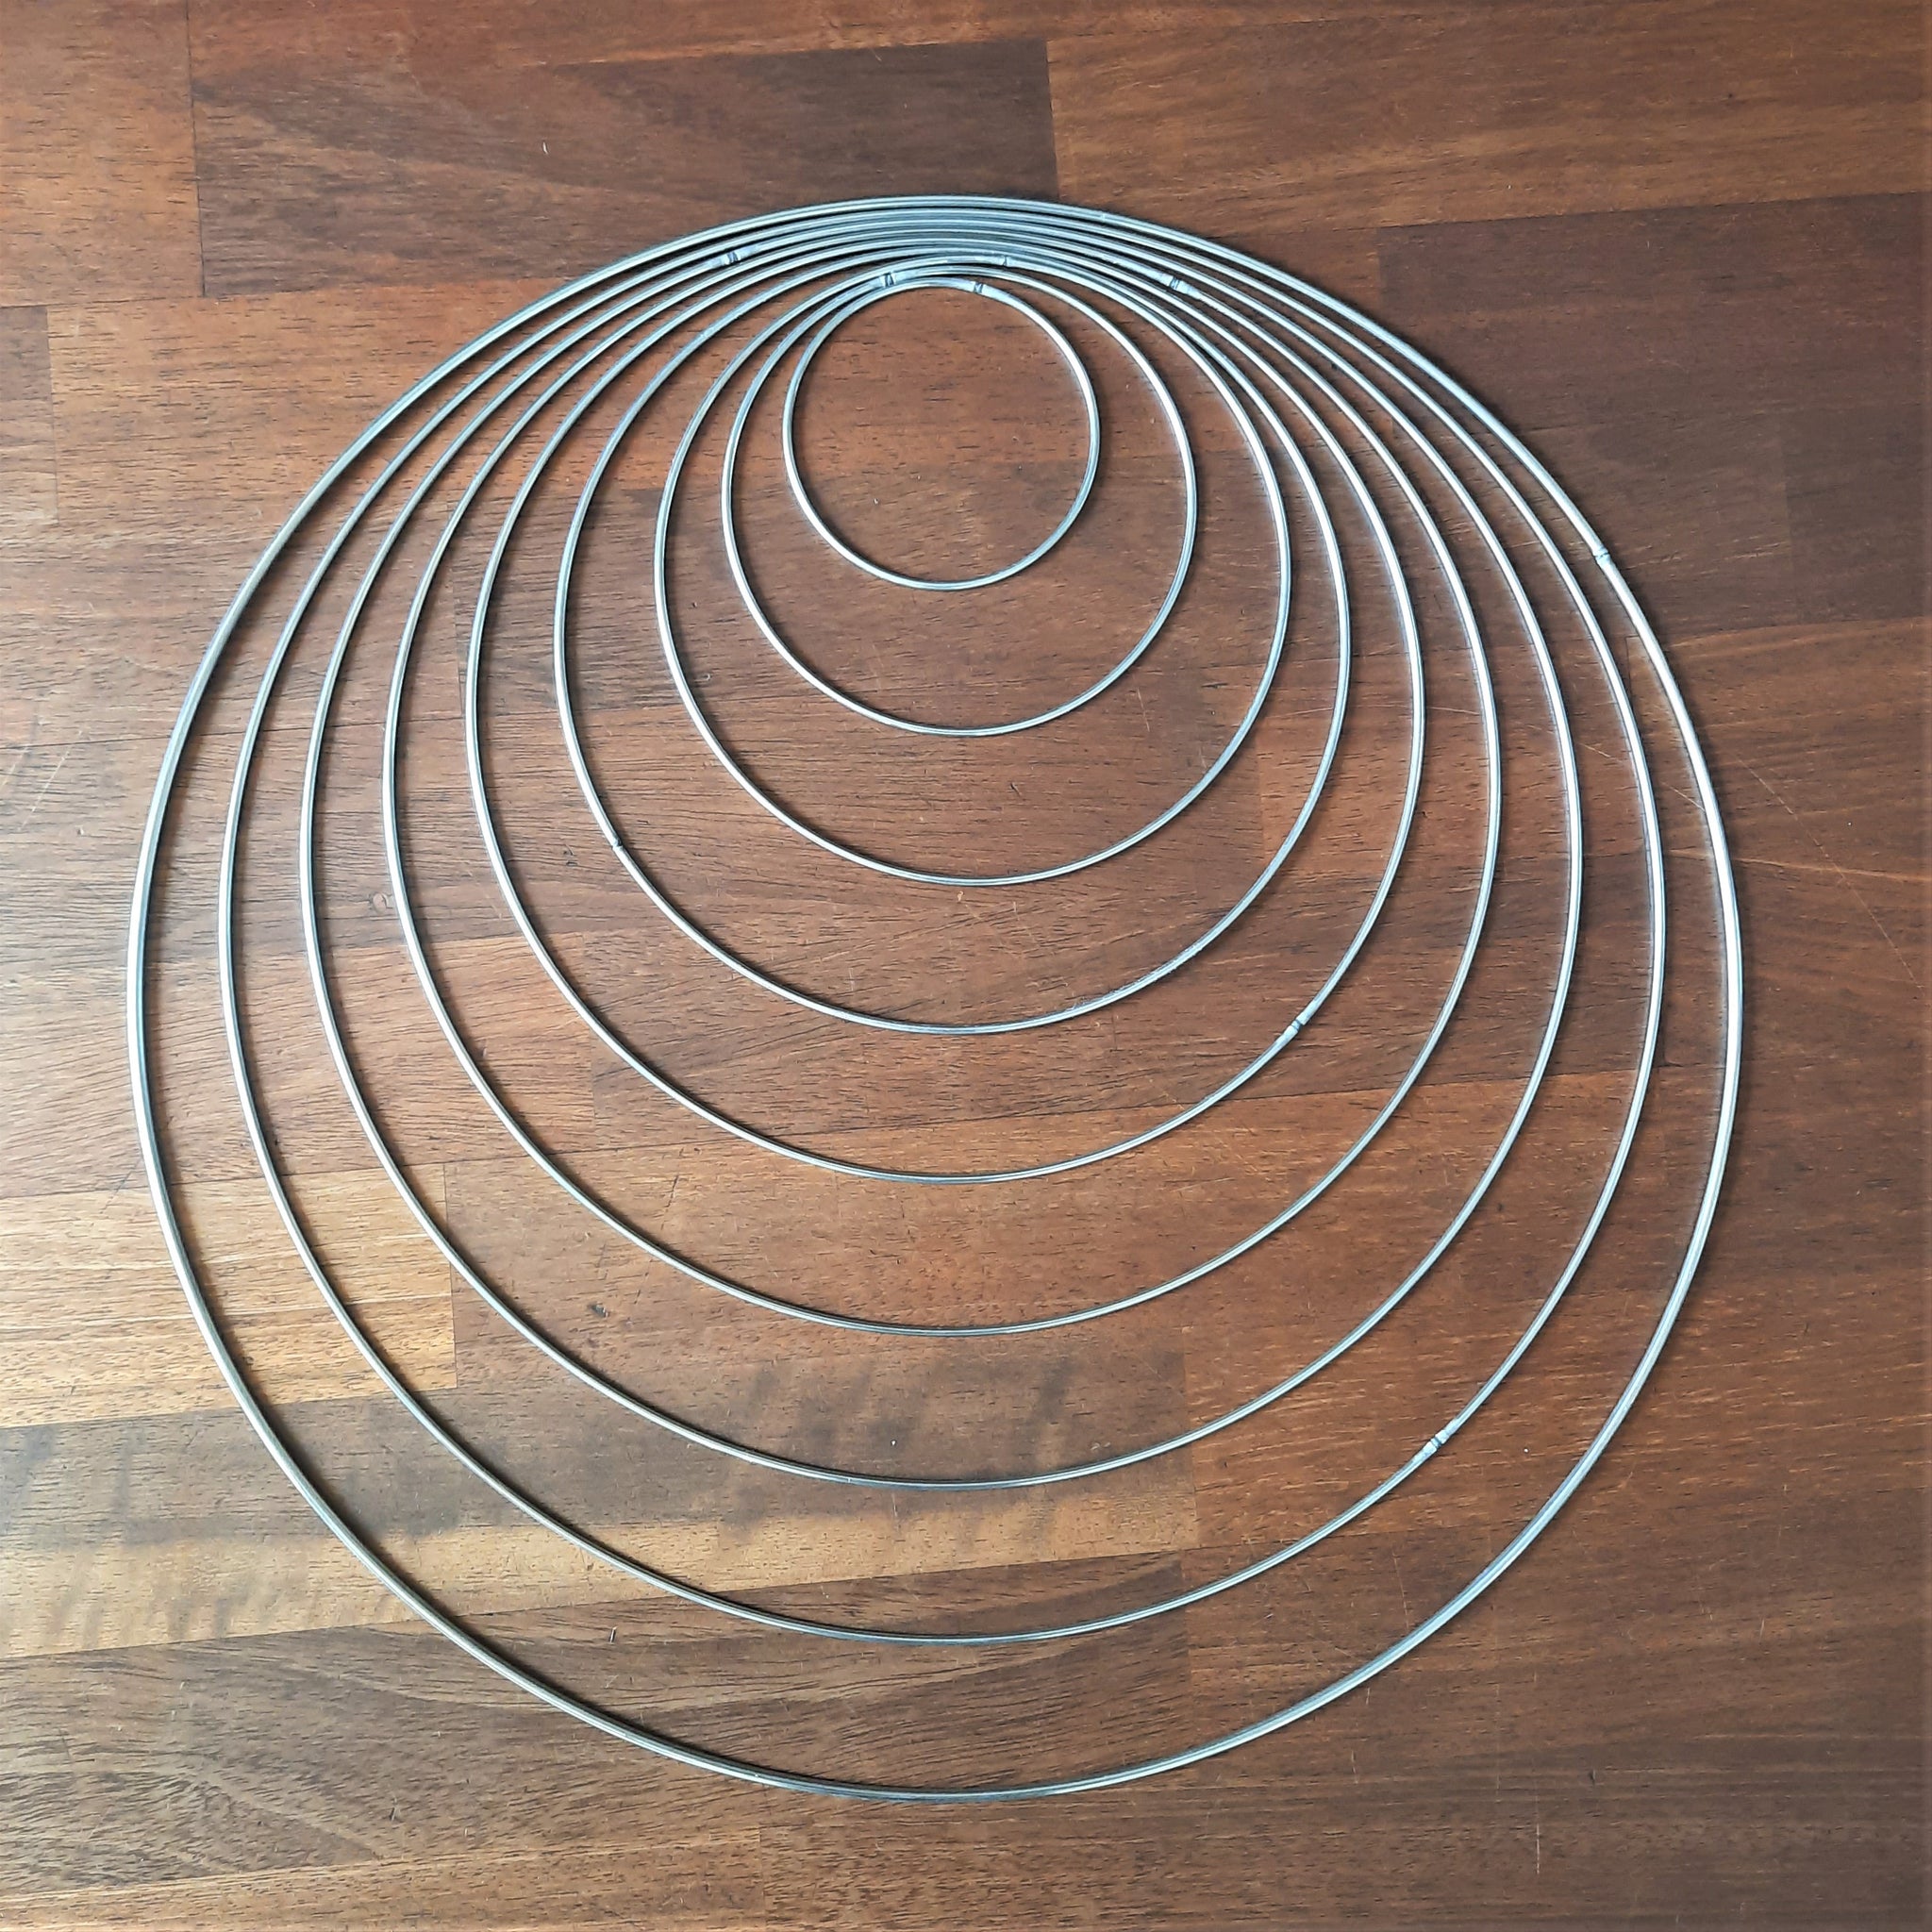 15cm diameter mandala ring - It's all in a nutshell